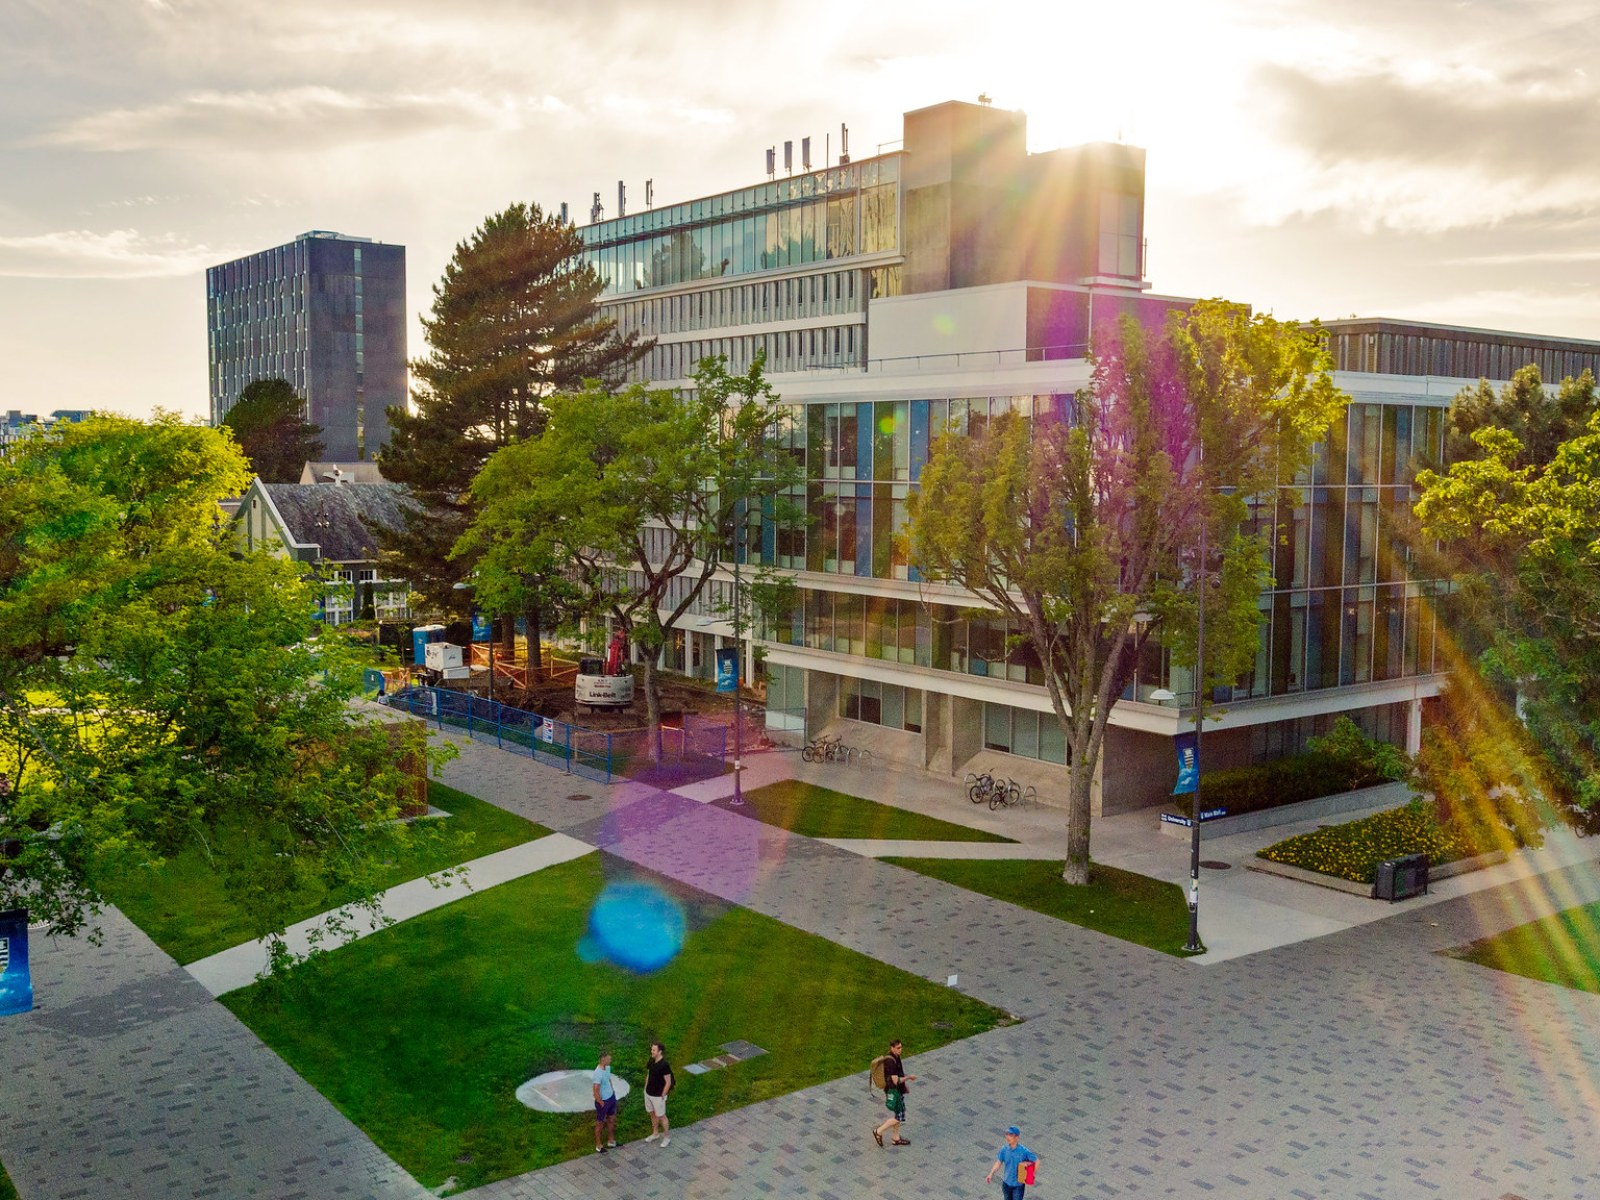 The University of British Columbia's Sauder School of Business